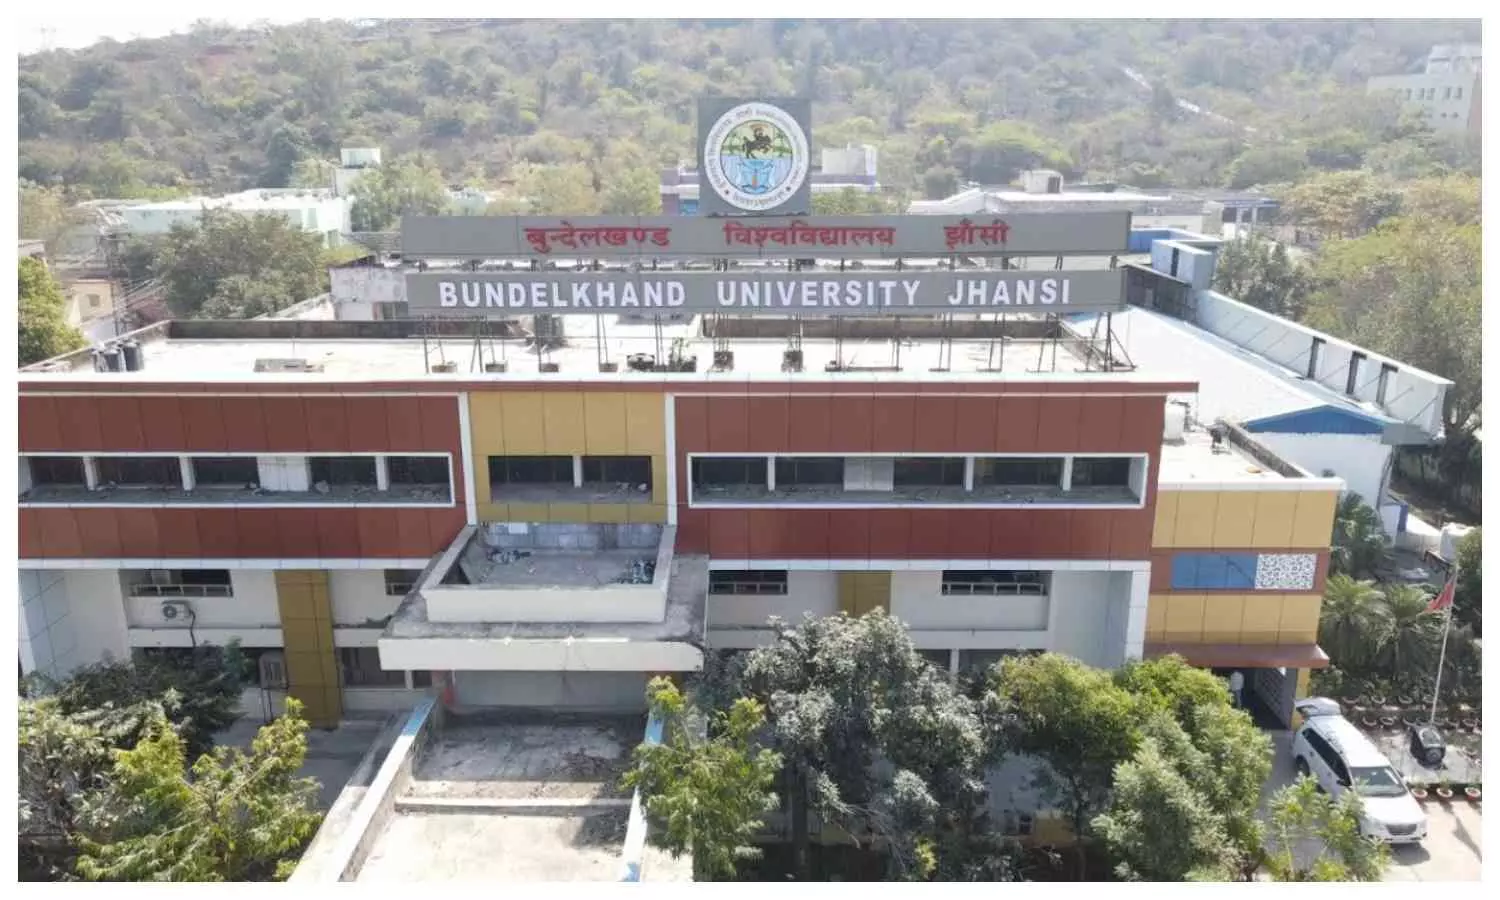 Bundelkhand University, jhansi news